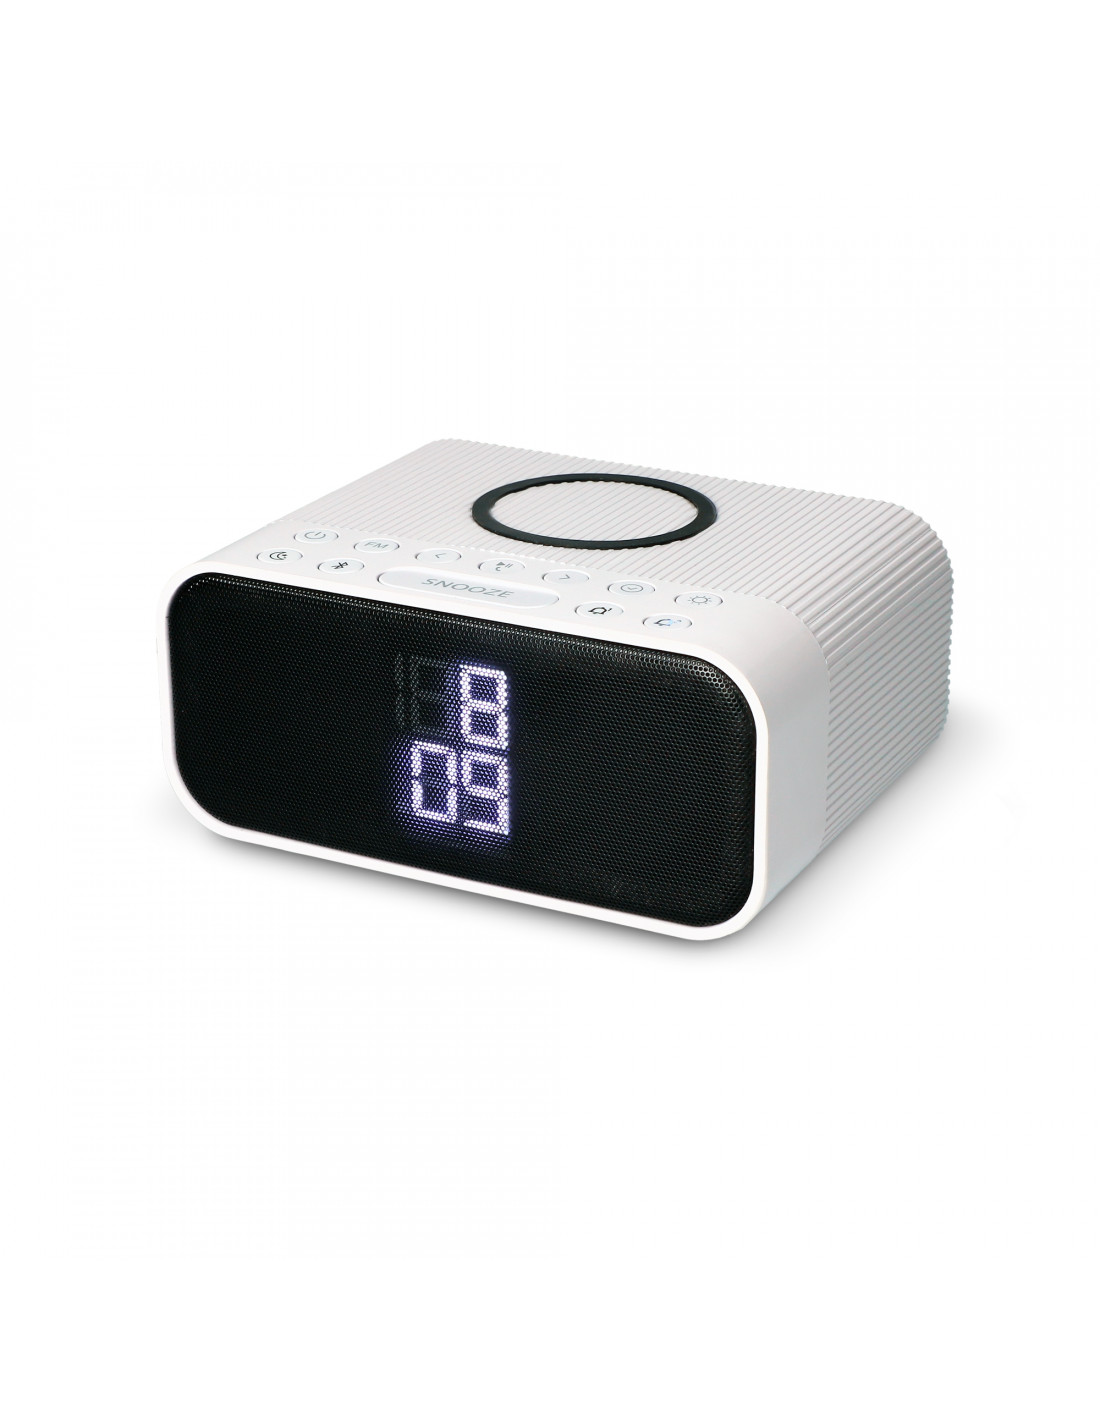 Reloj despertador con Radio FM, Altavoz Bluetooth, Subwoofer